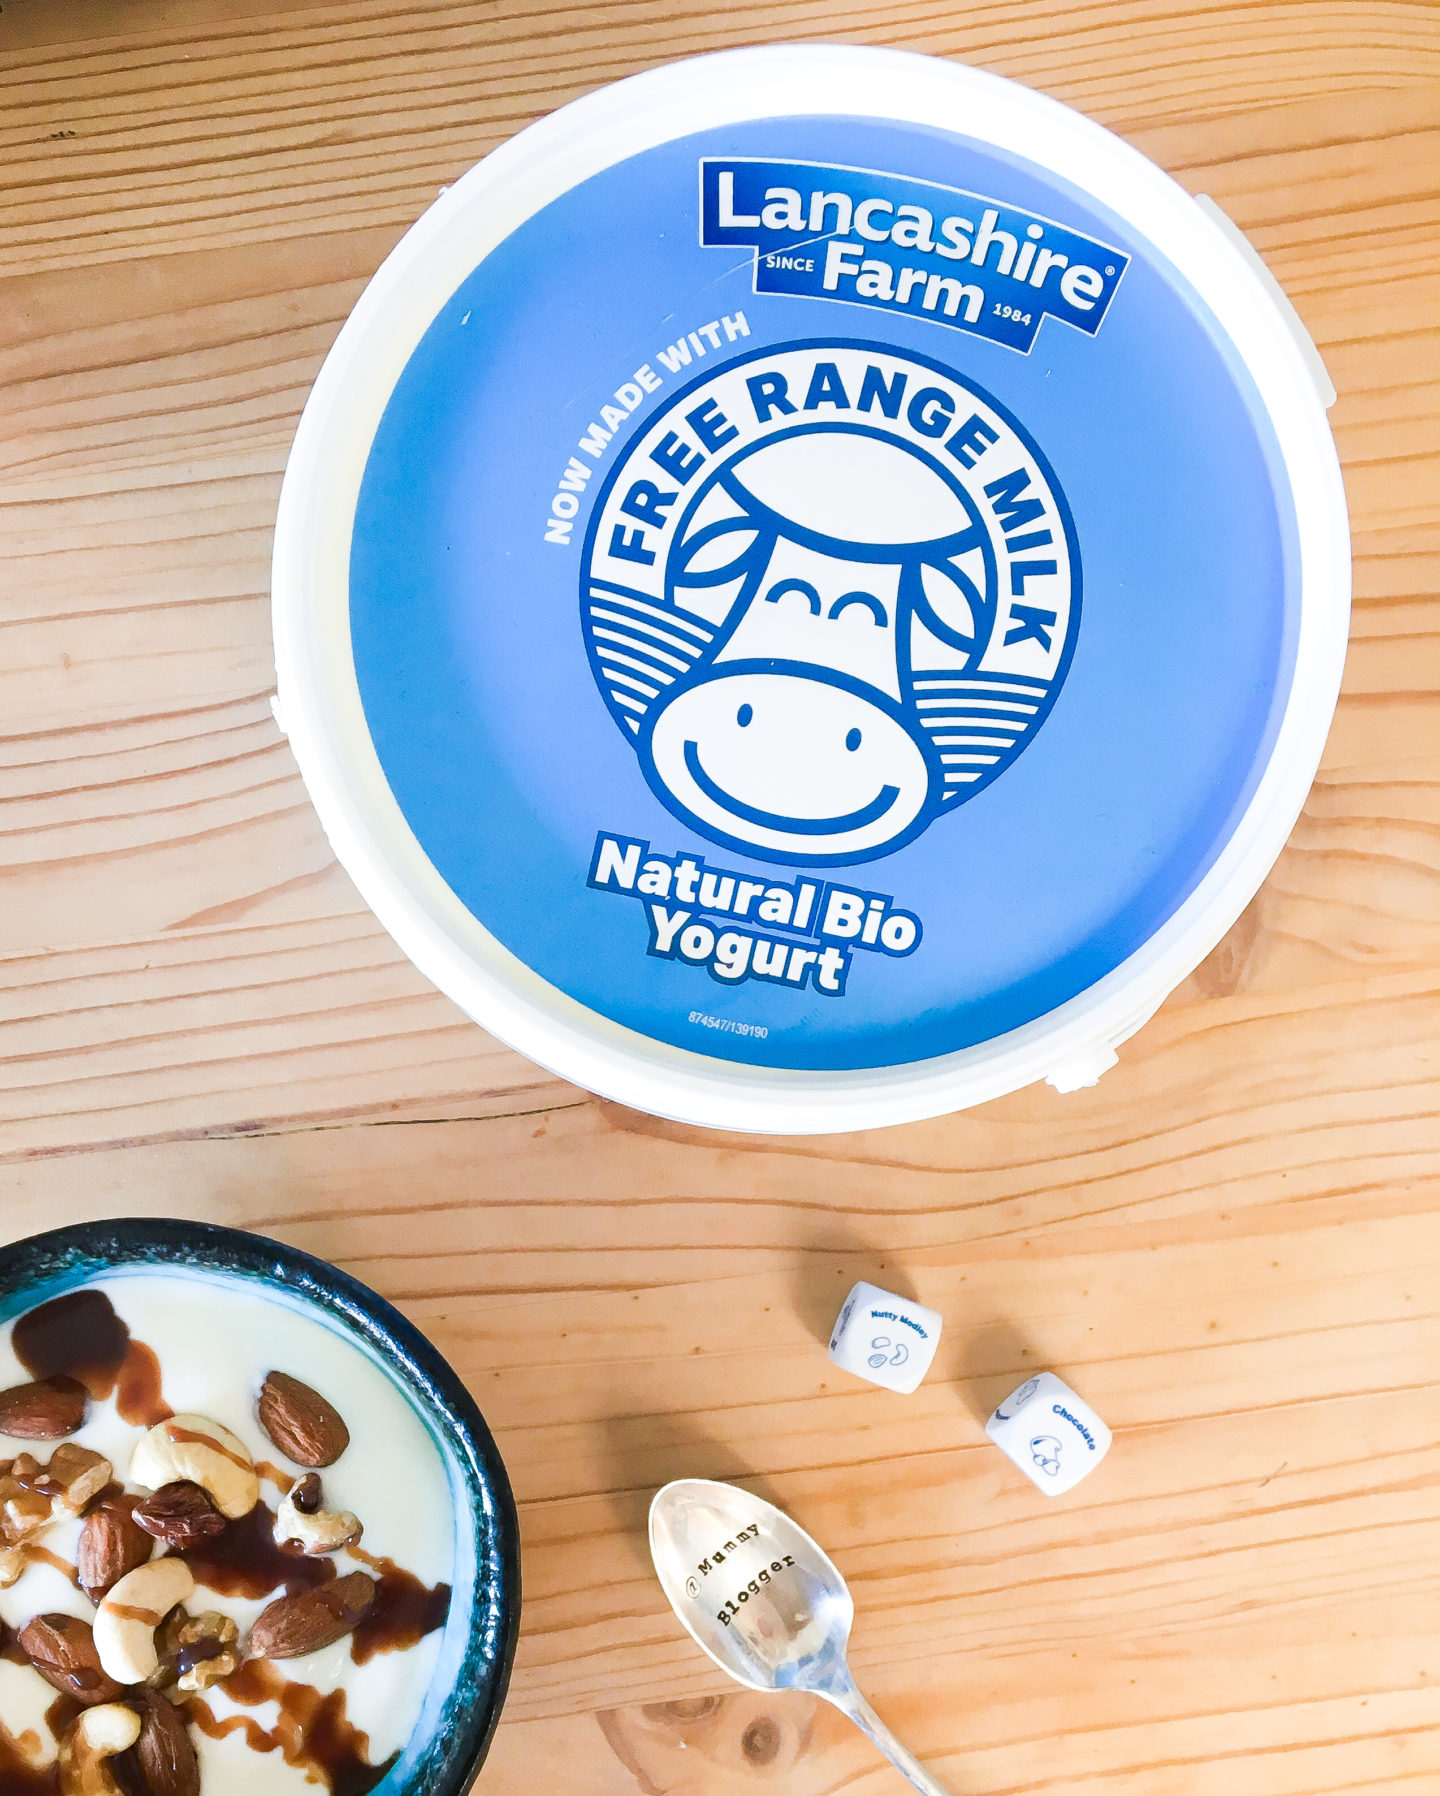 Lancashire Farm natural yogurt